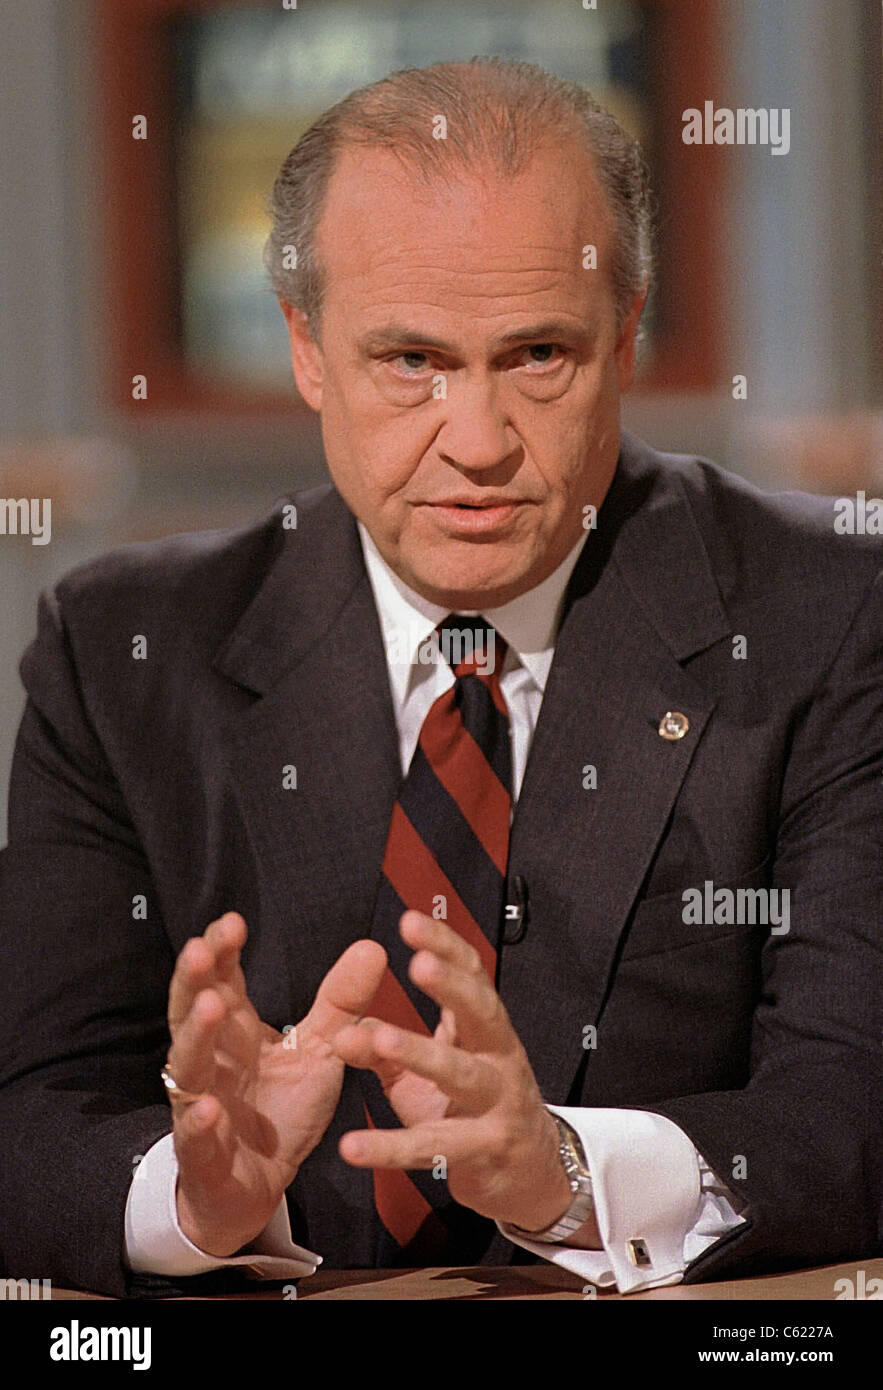 Senator Fred Thompson actor and politician Stock Photo